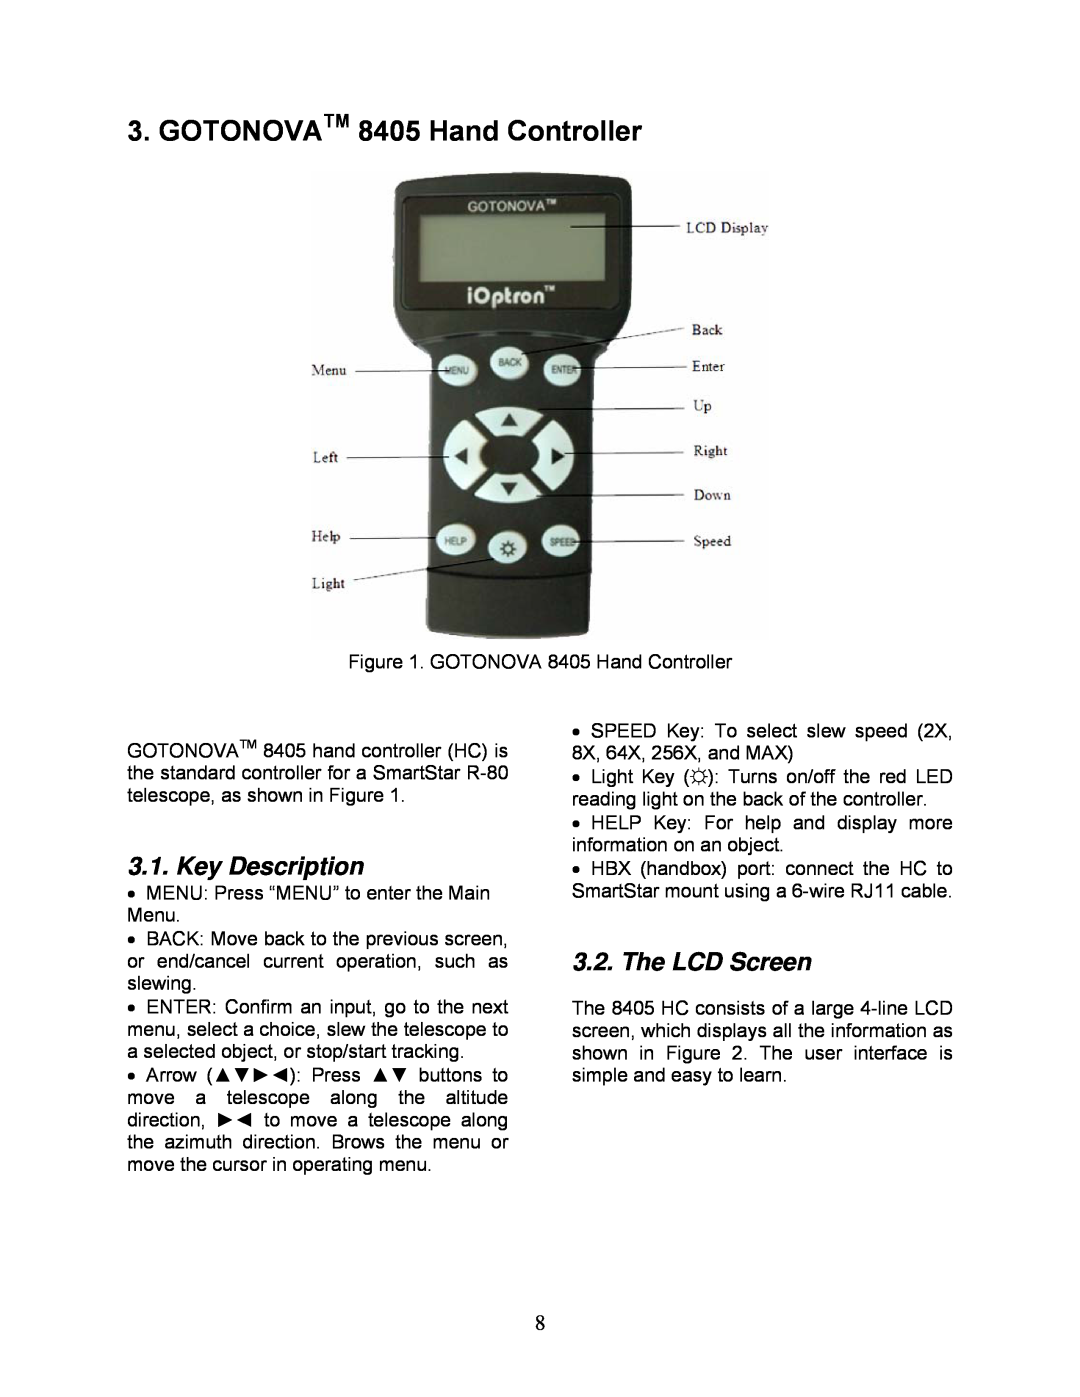 iOptron instruction manual GOTONOVATM 8405 Hand Controller, Key Description, The LCD Screen 